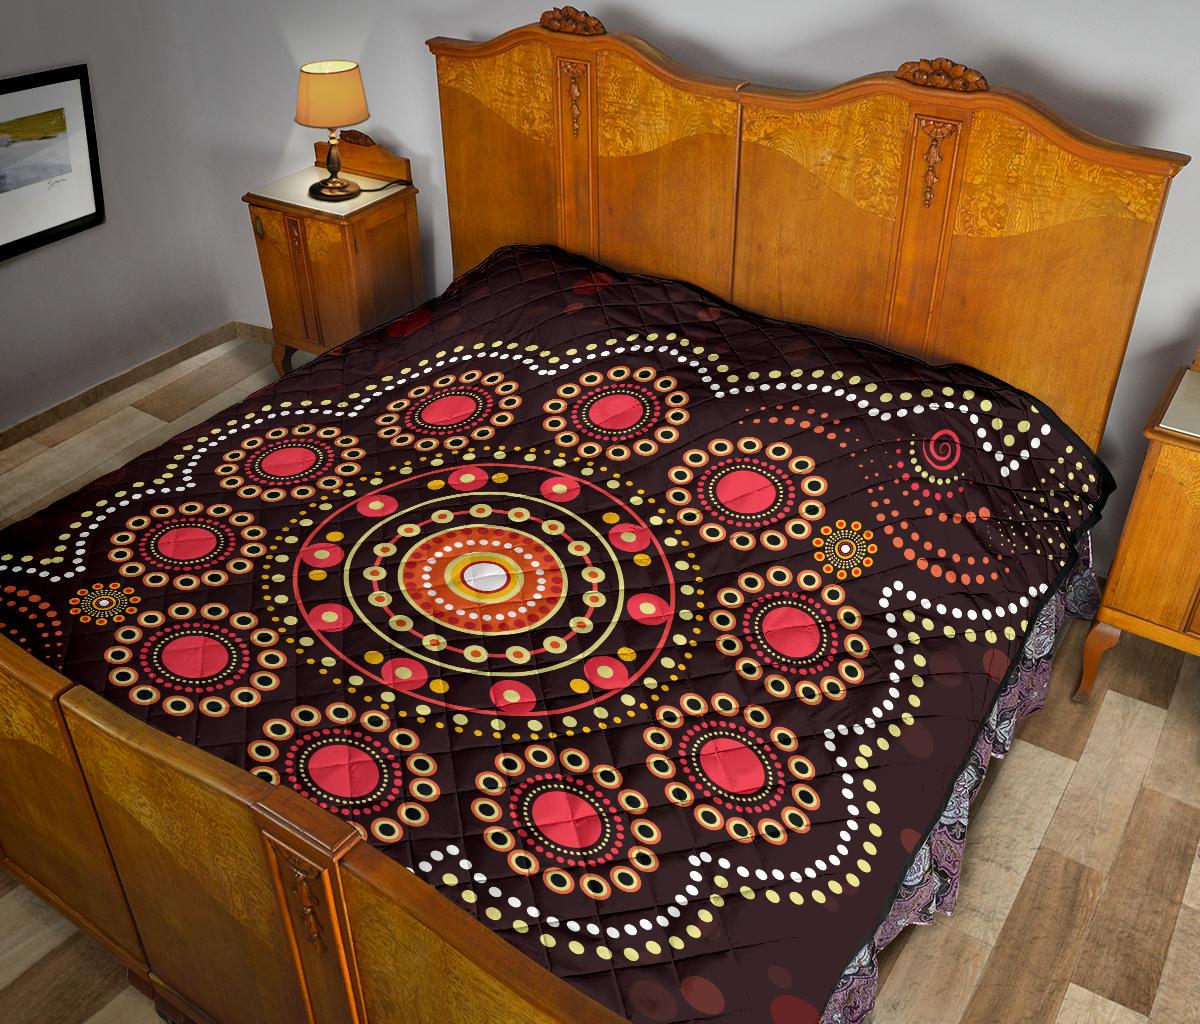 Aboriginal Premium Quilt - Australian Colorful Flower Dot Painting Art